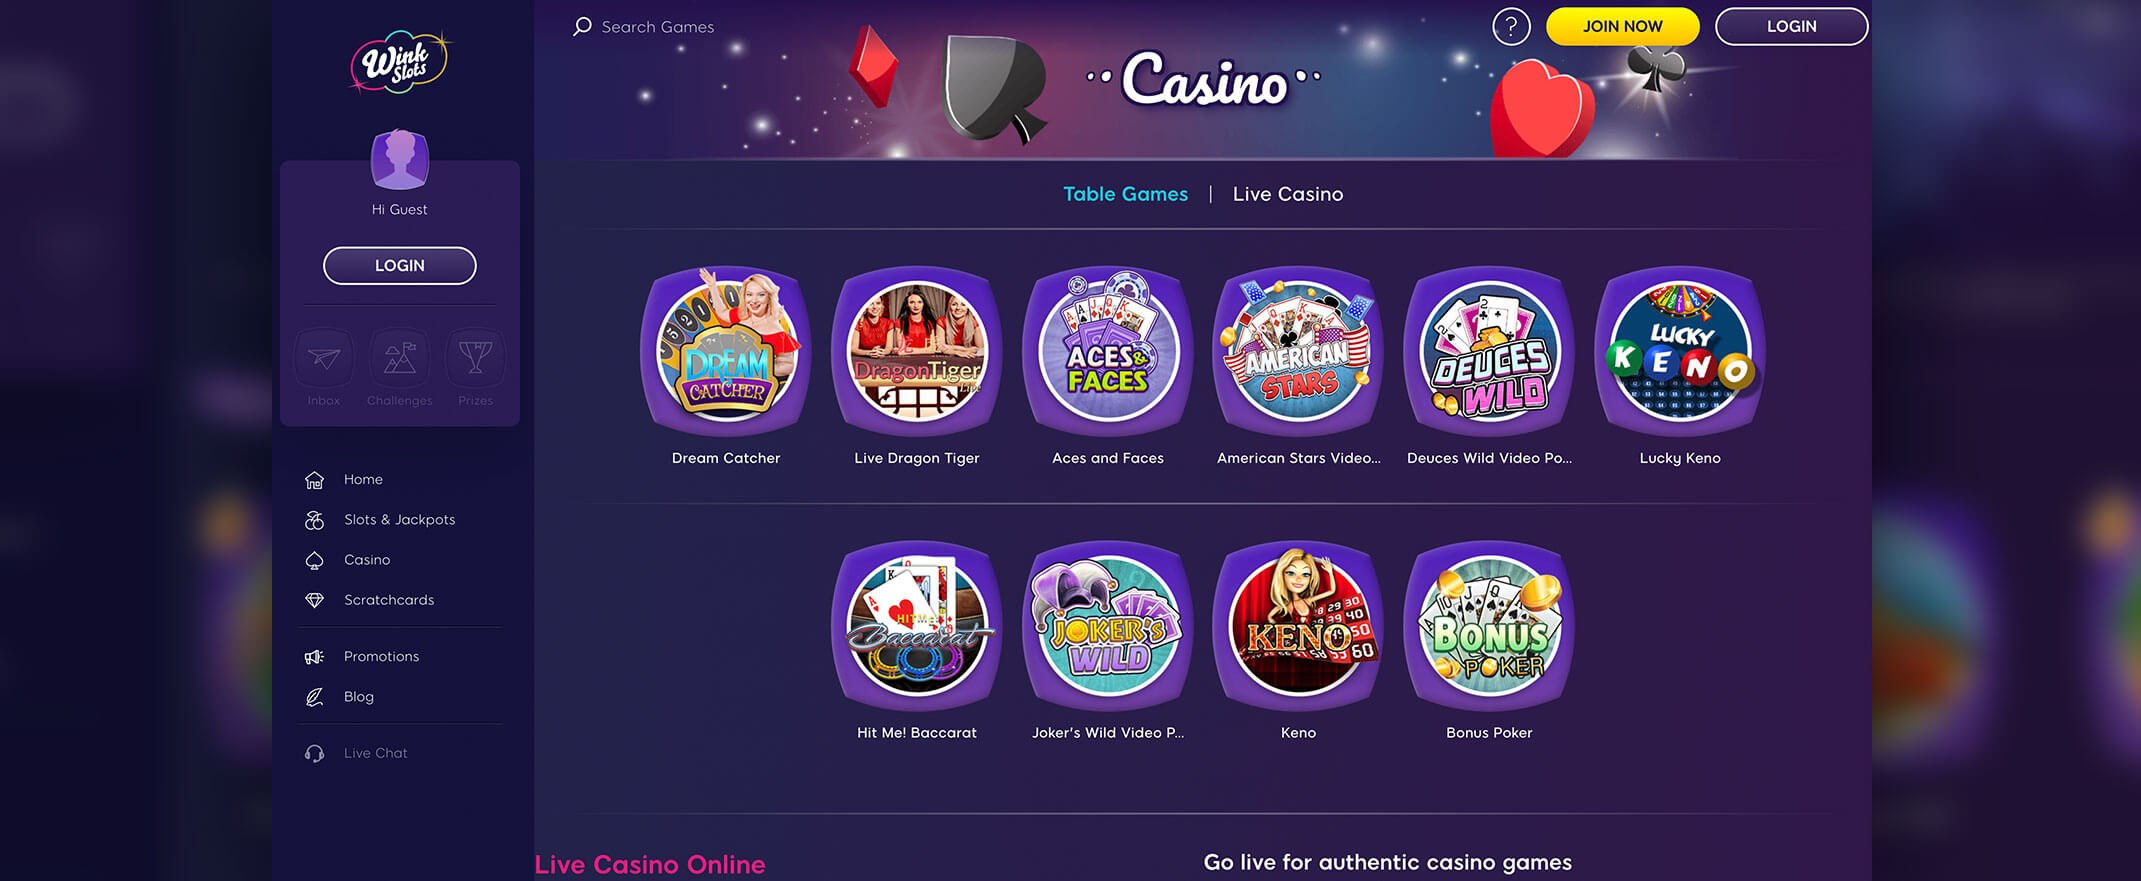 Wink Slots Casino Games Library Screenshot